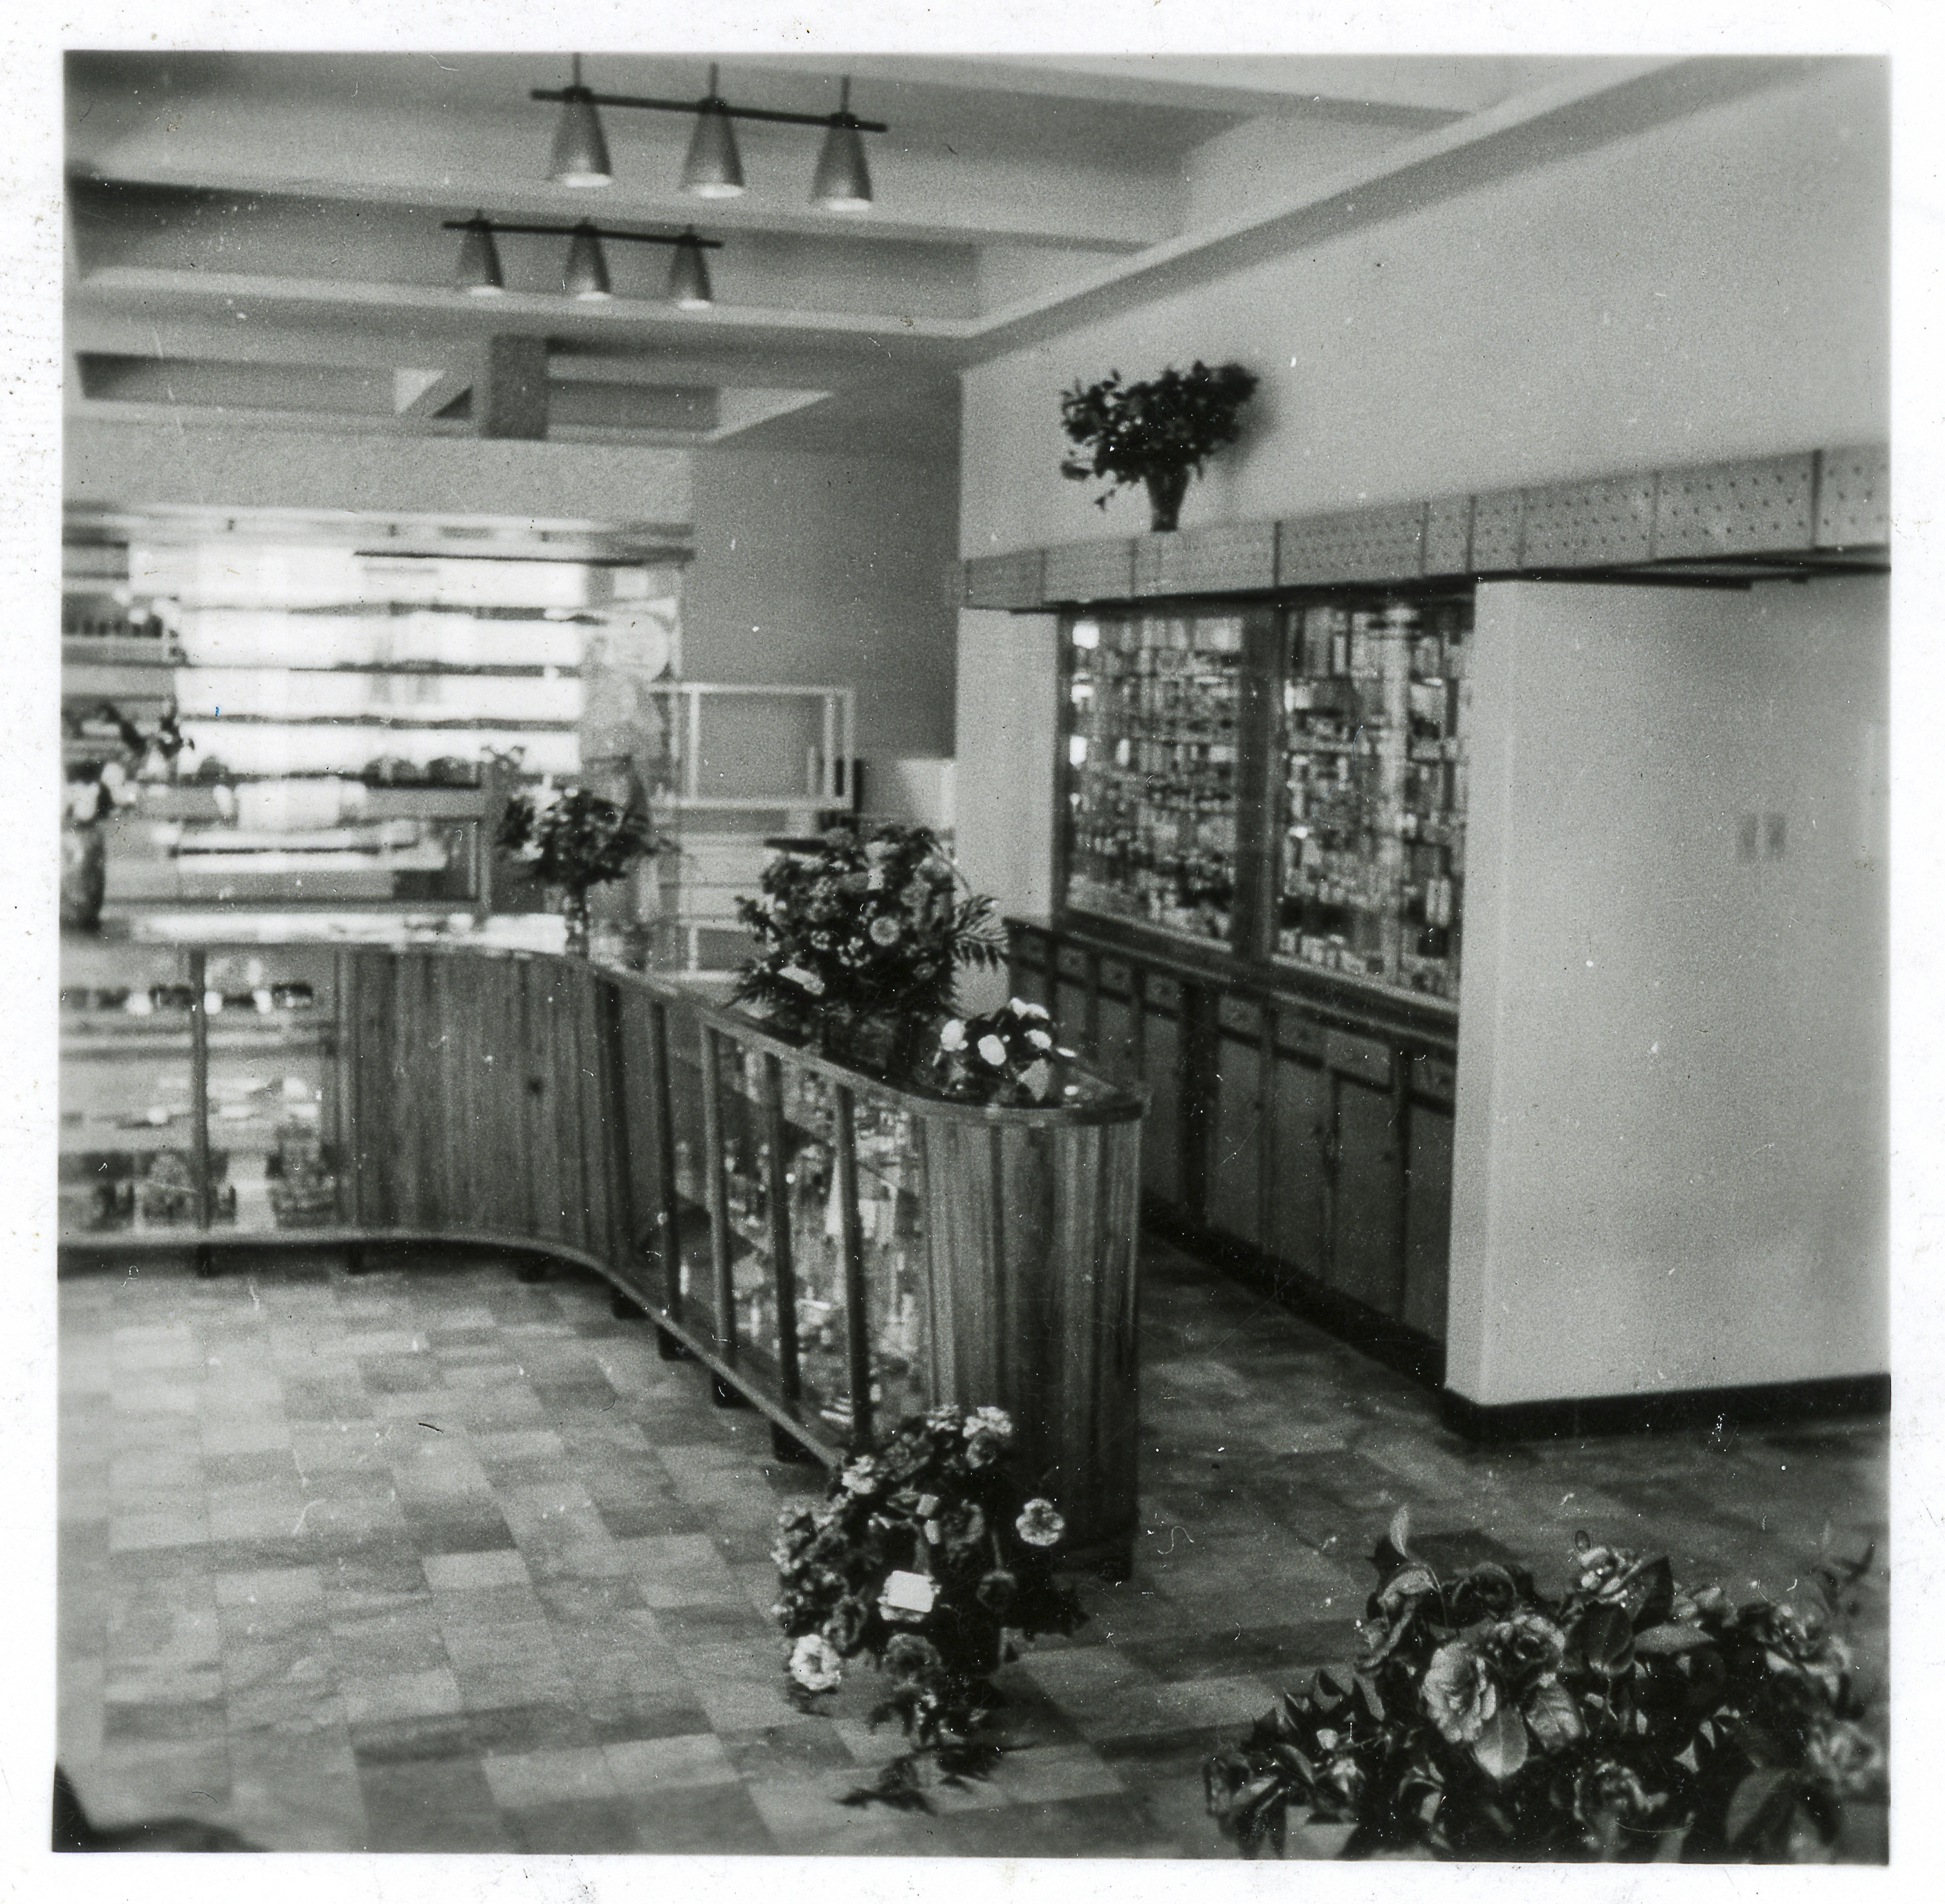 Farmacia Suiza, arq. MAZZINI Luis, 1950, Nueva Helvecia, foto archivo personal Arq. Mazzini, Digitaliza Danaé Latchinian 2015